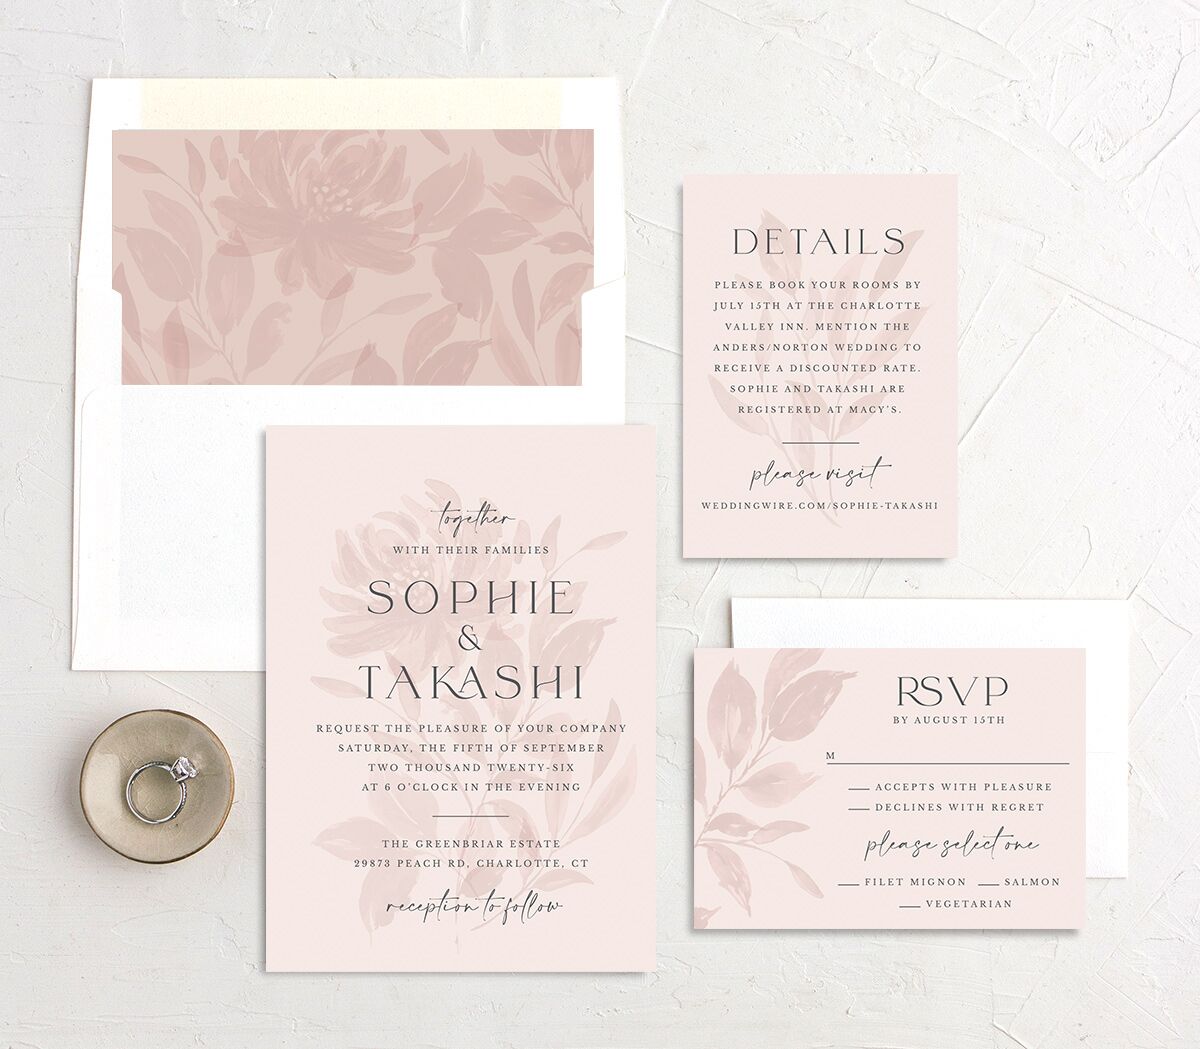 Floral Sophistication Wedding Invitations suite in Rose Pink